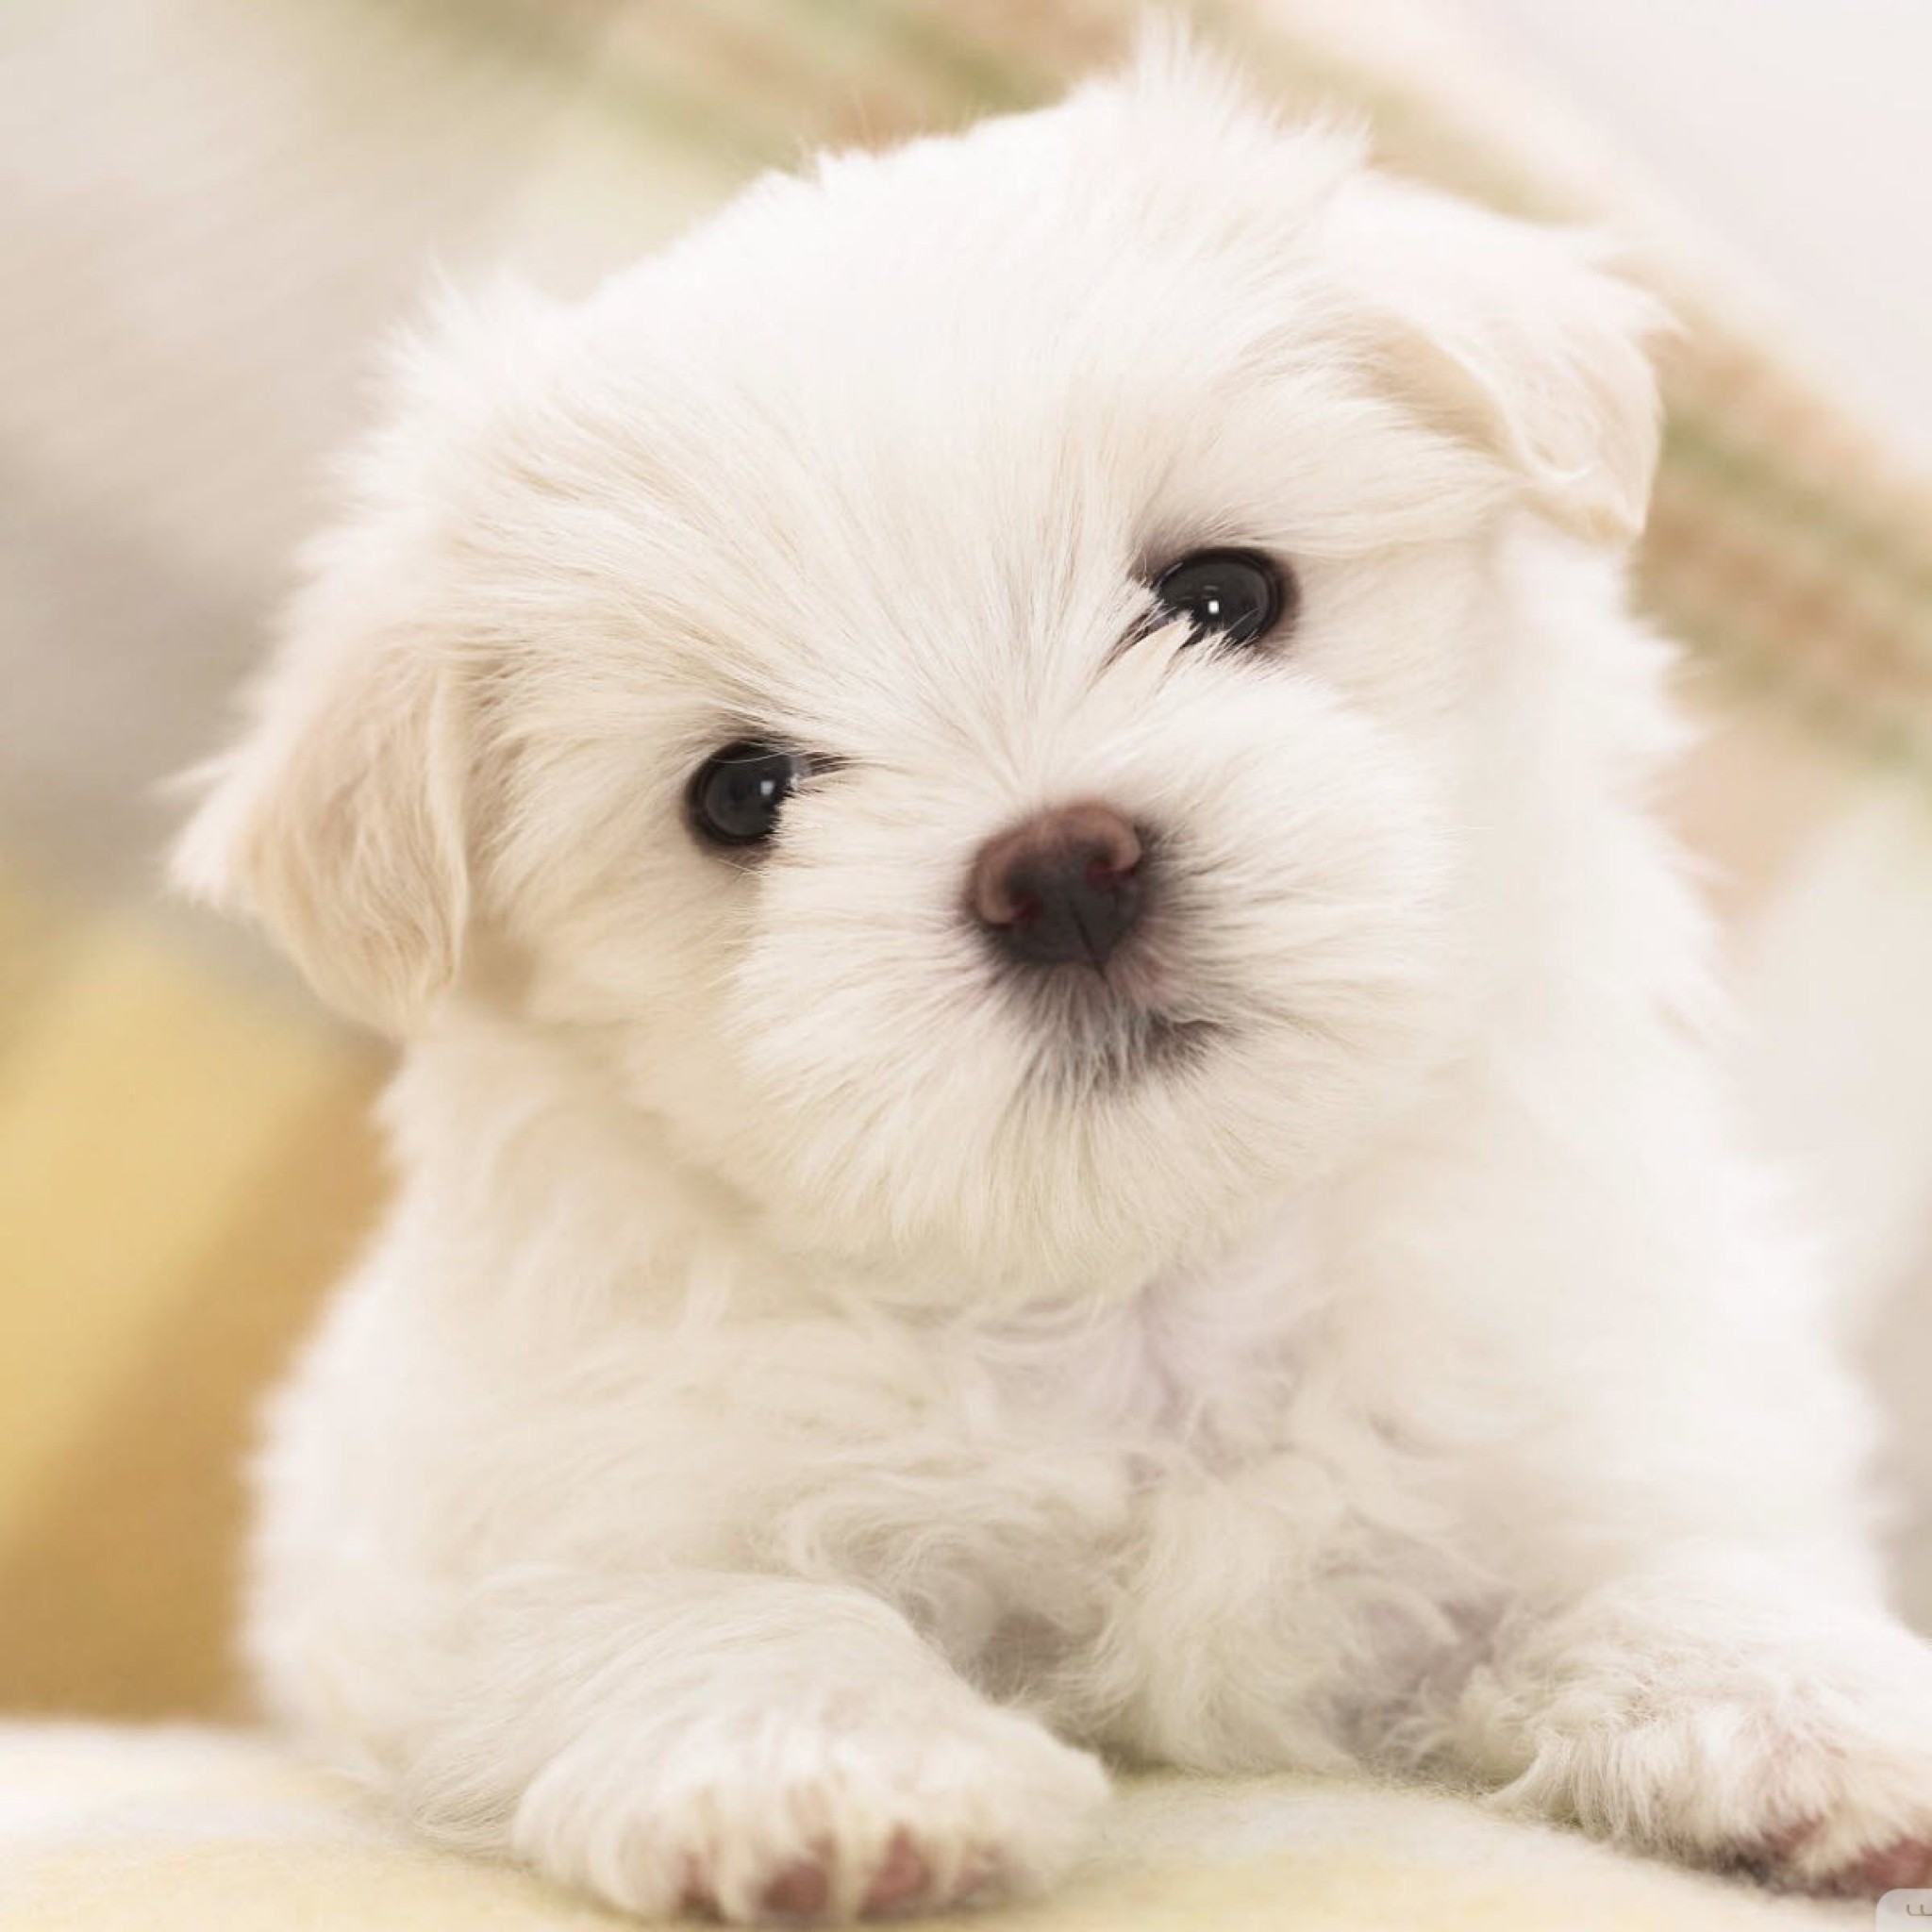 Cute little dog pics download